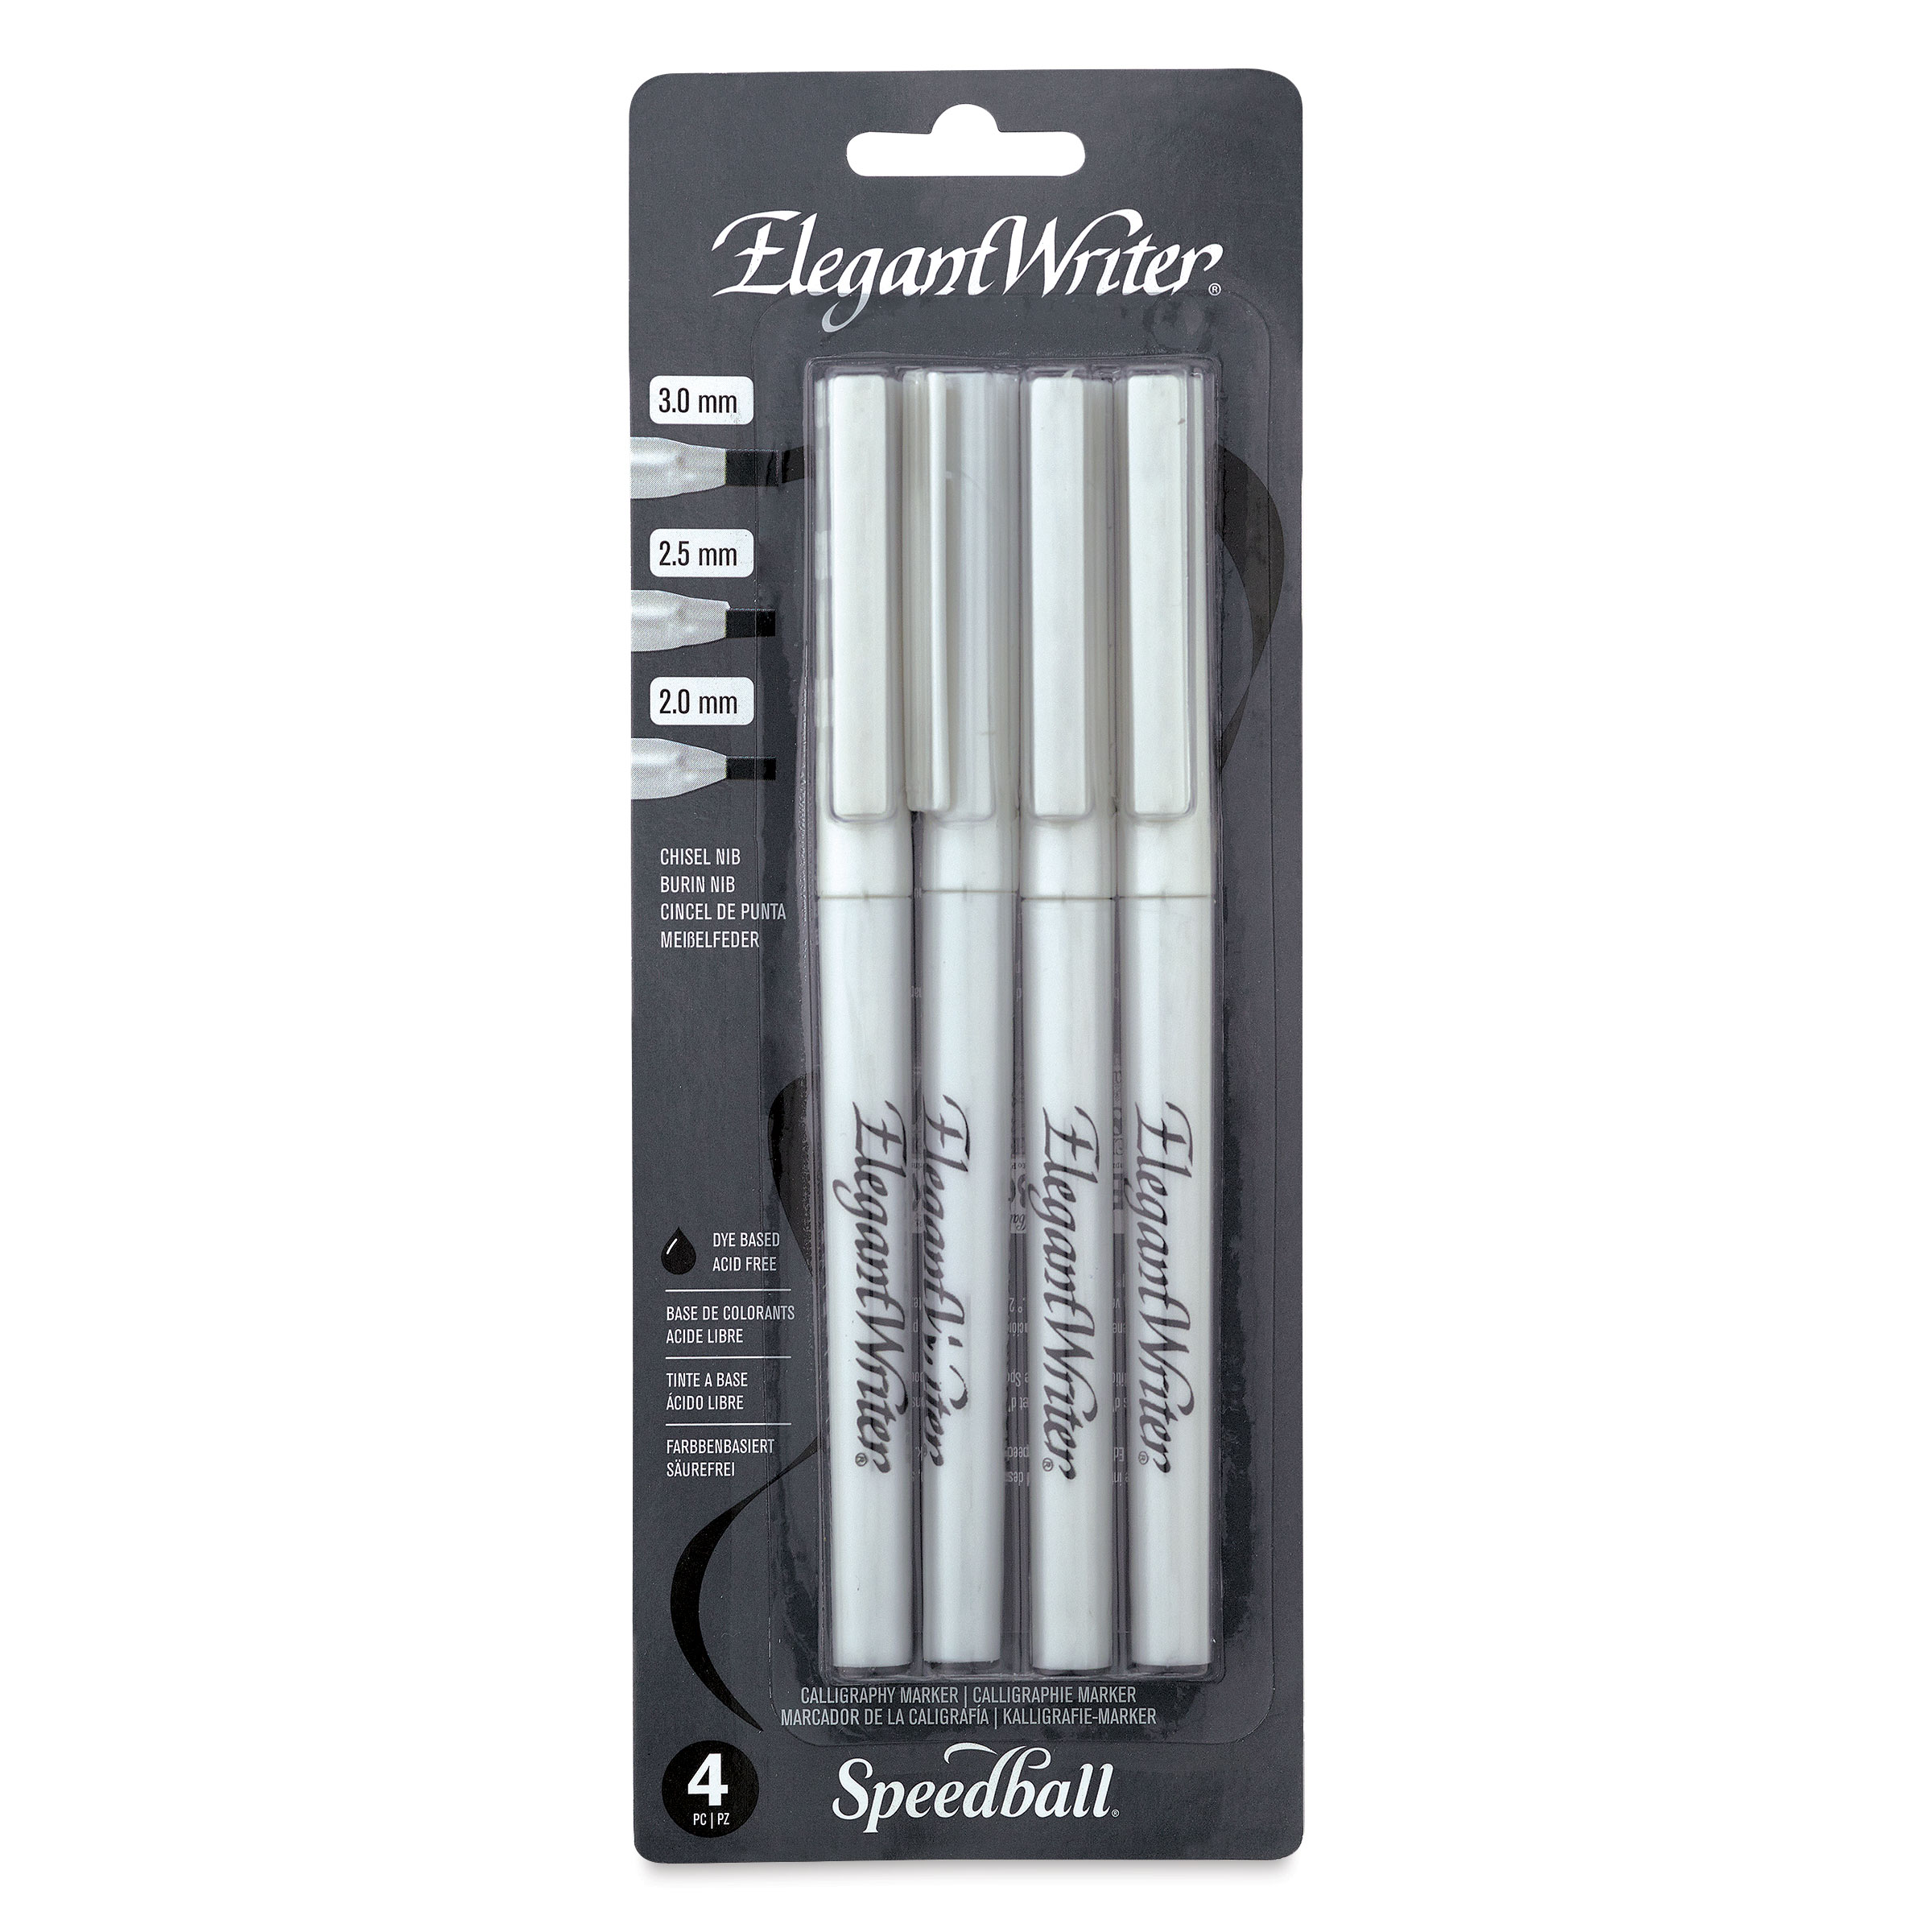 Calligraphy Pen Set, Hand Lettering Markers Set, Calligraphy Markers Pack,  Brush Lettering Kit, 2.0mm Markers, 3.5mm Markers, 5.0mm Markers 